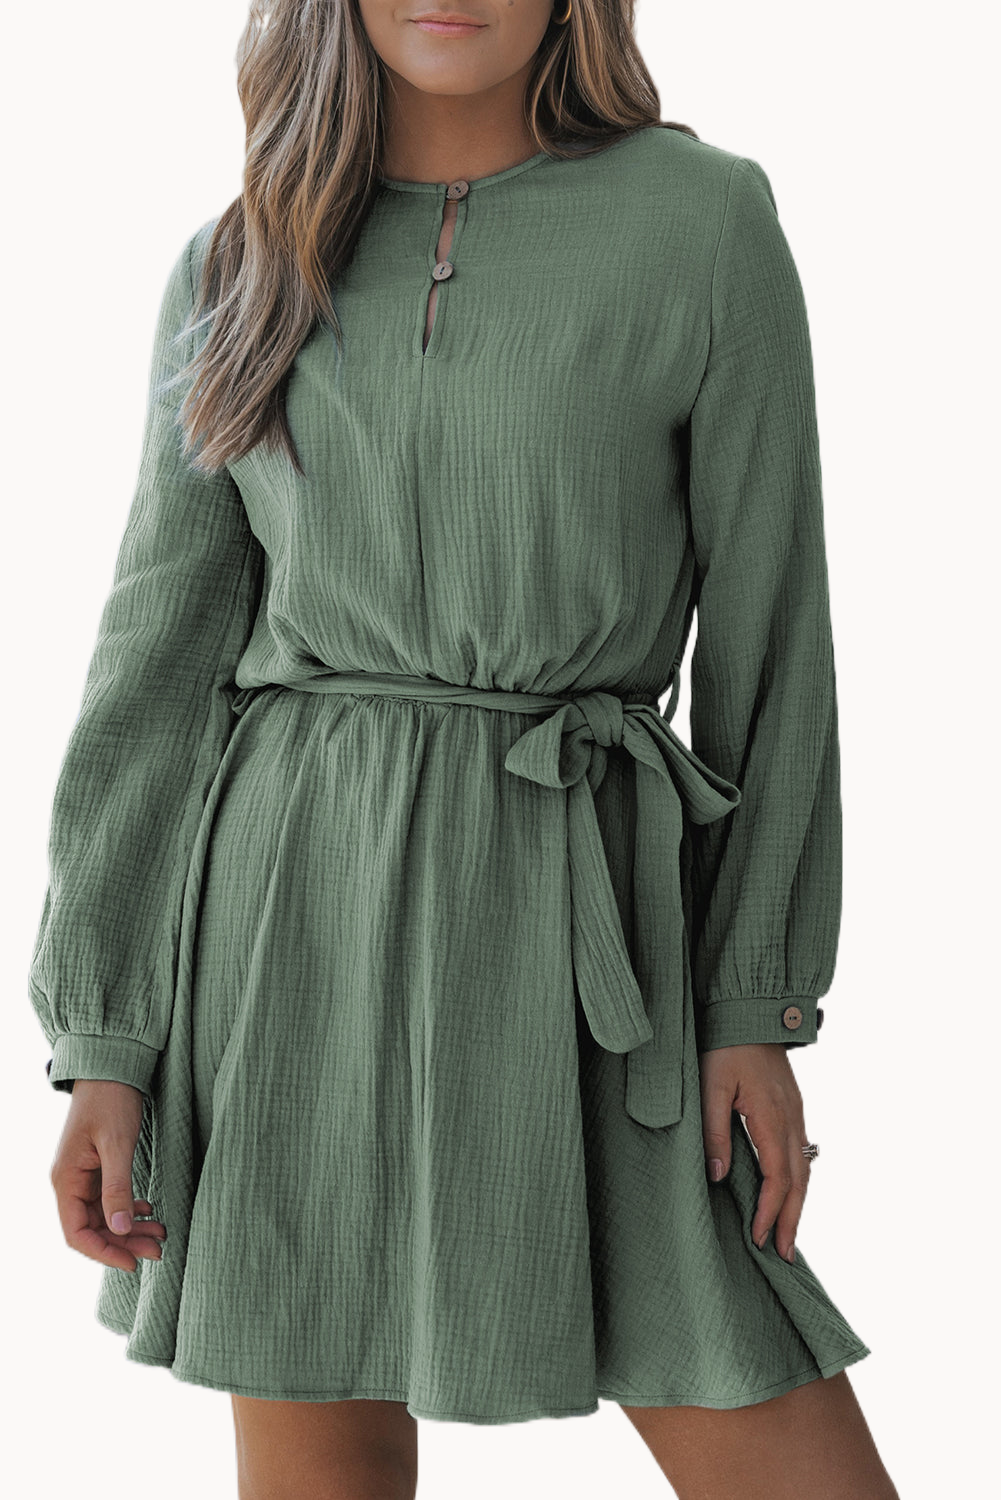 Ireland Puff Sleeve Drawstring 100% Cotton Womens Mini Dress